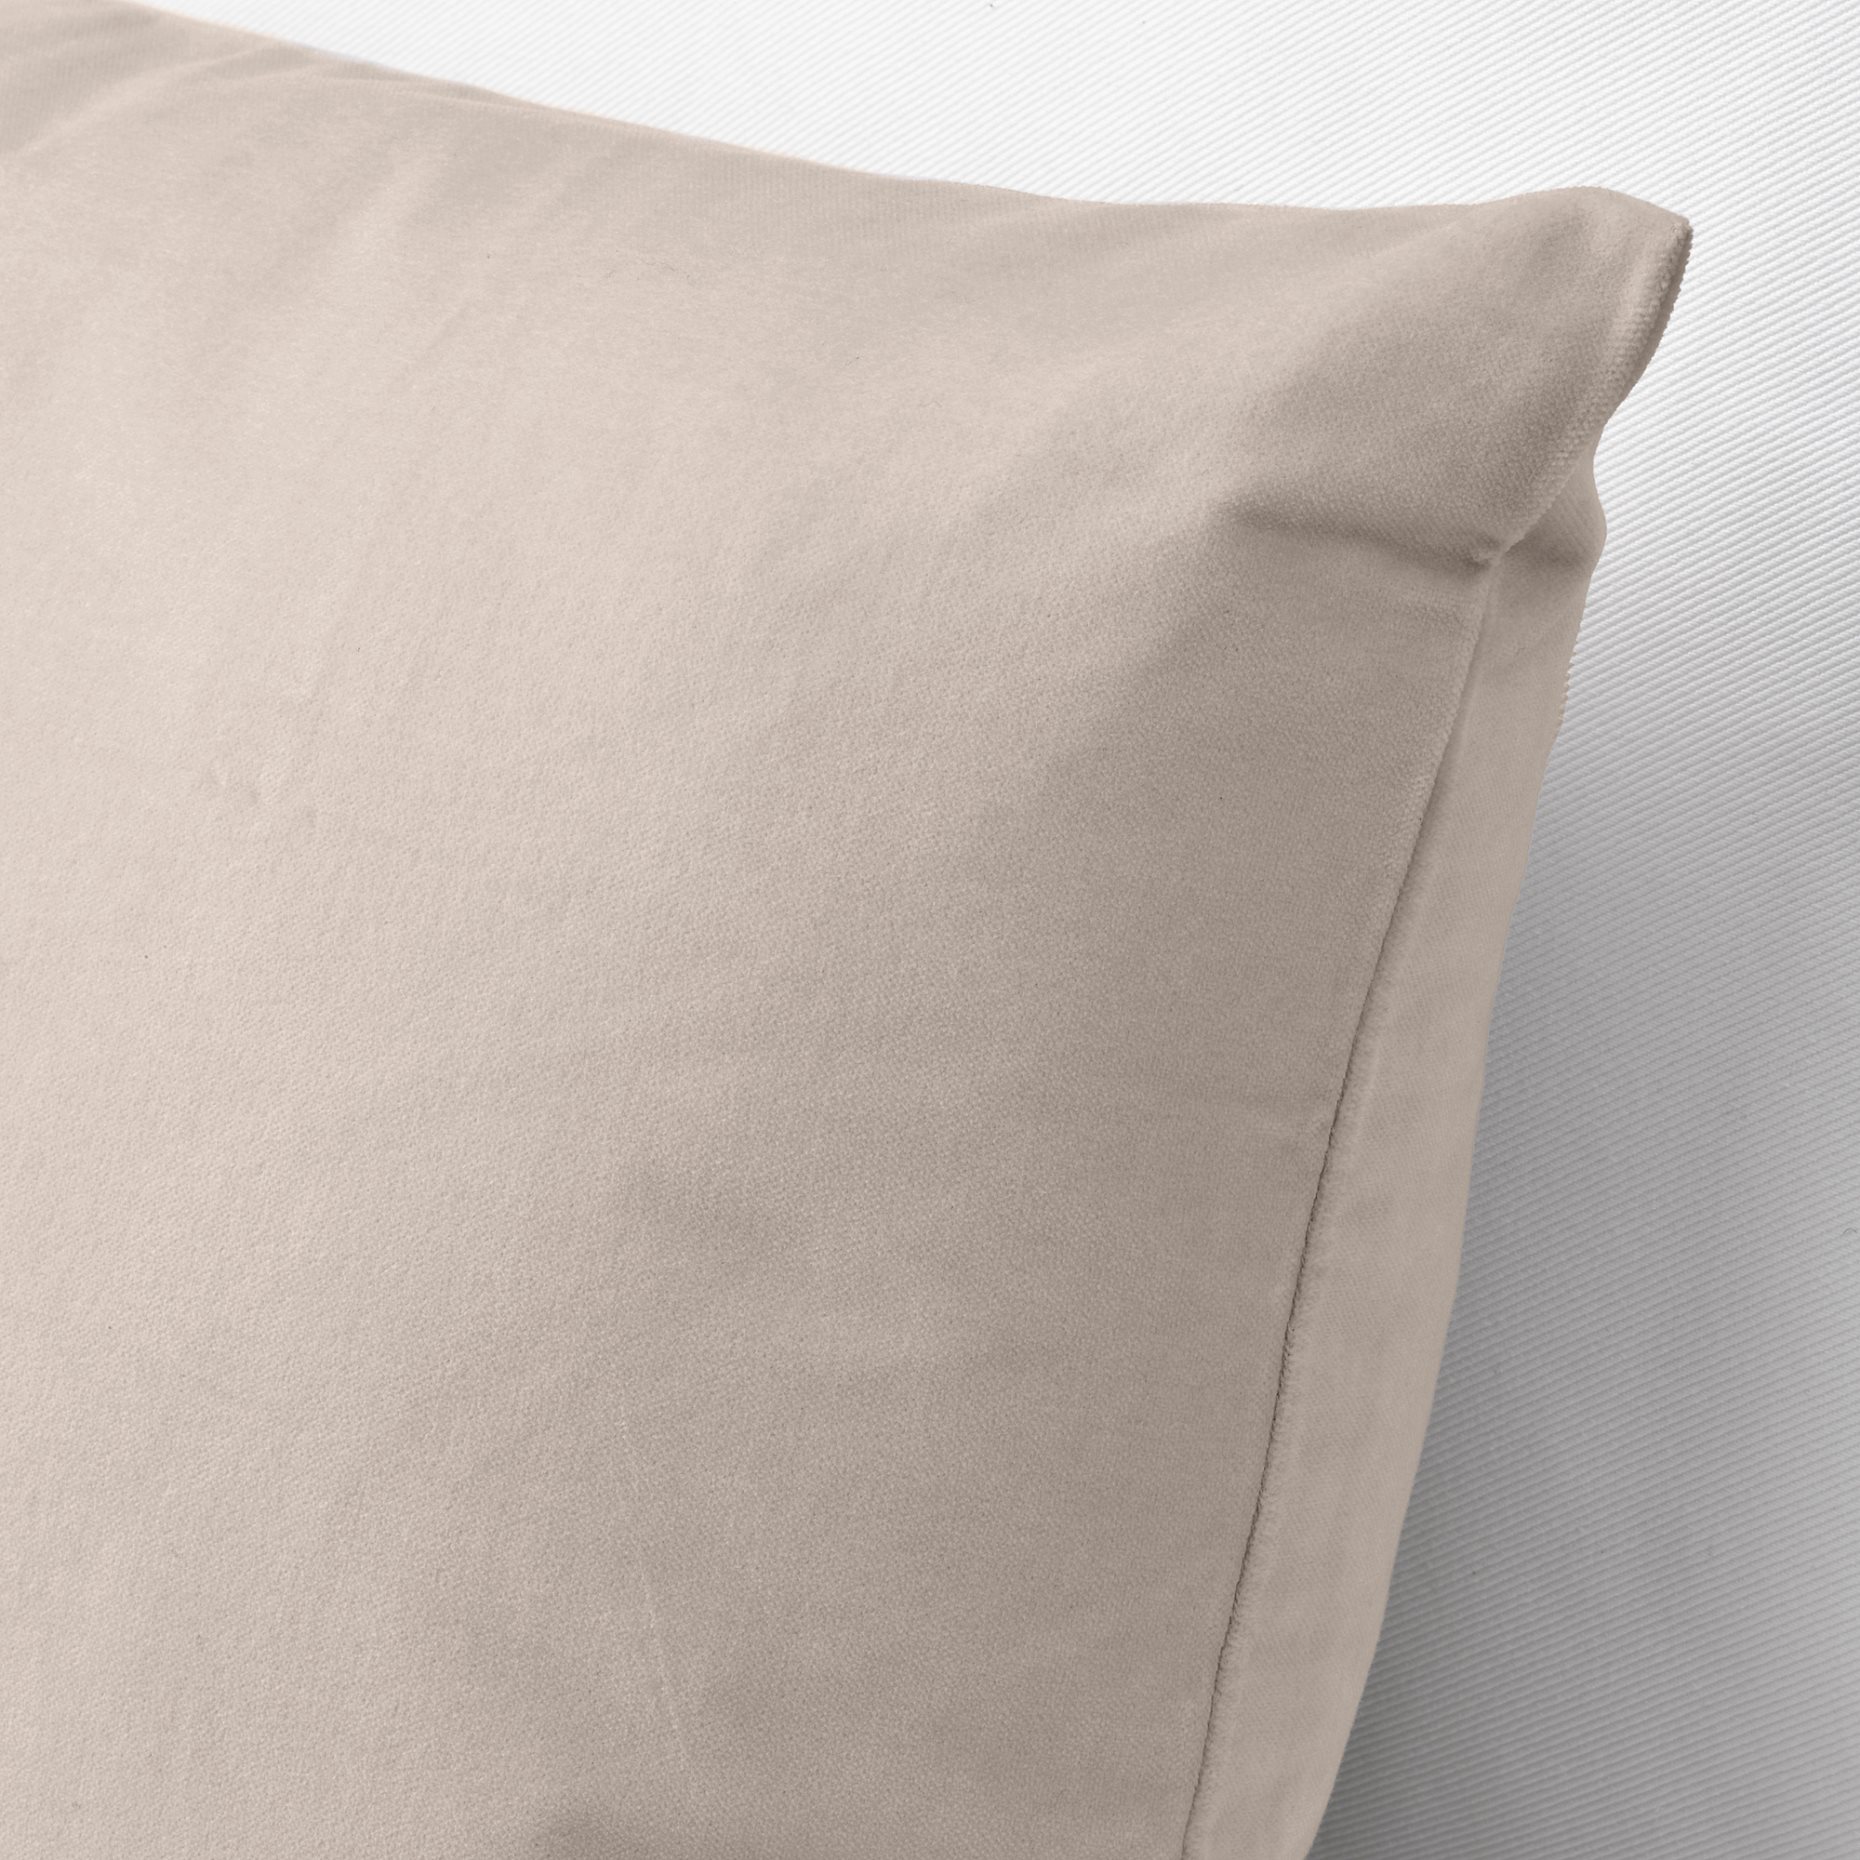 SANELA, cushion cover, 40x58 cm, 205.310.17